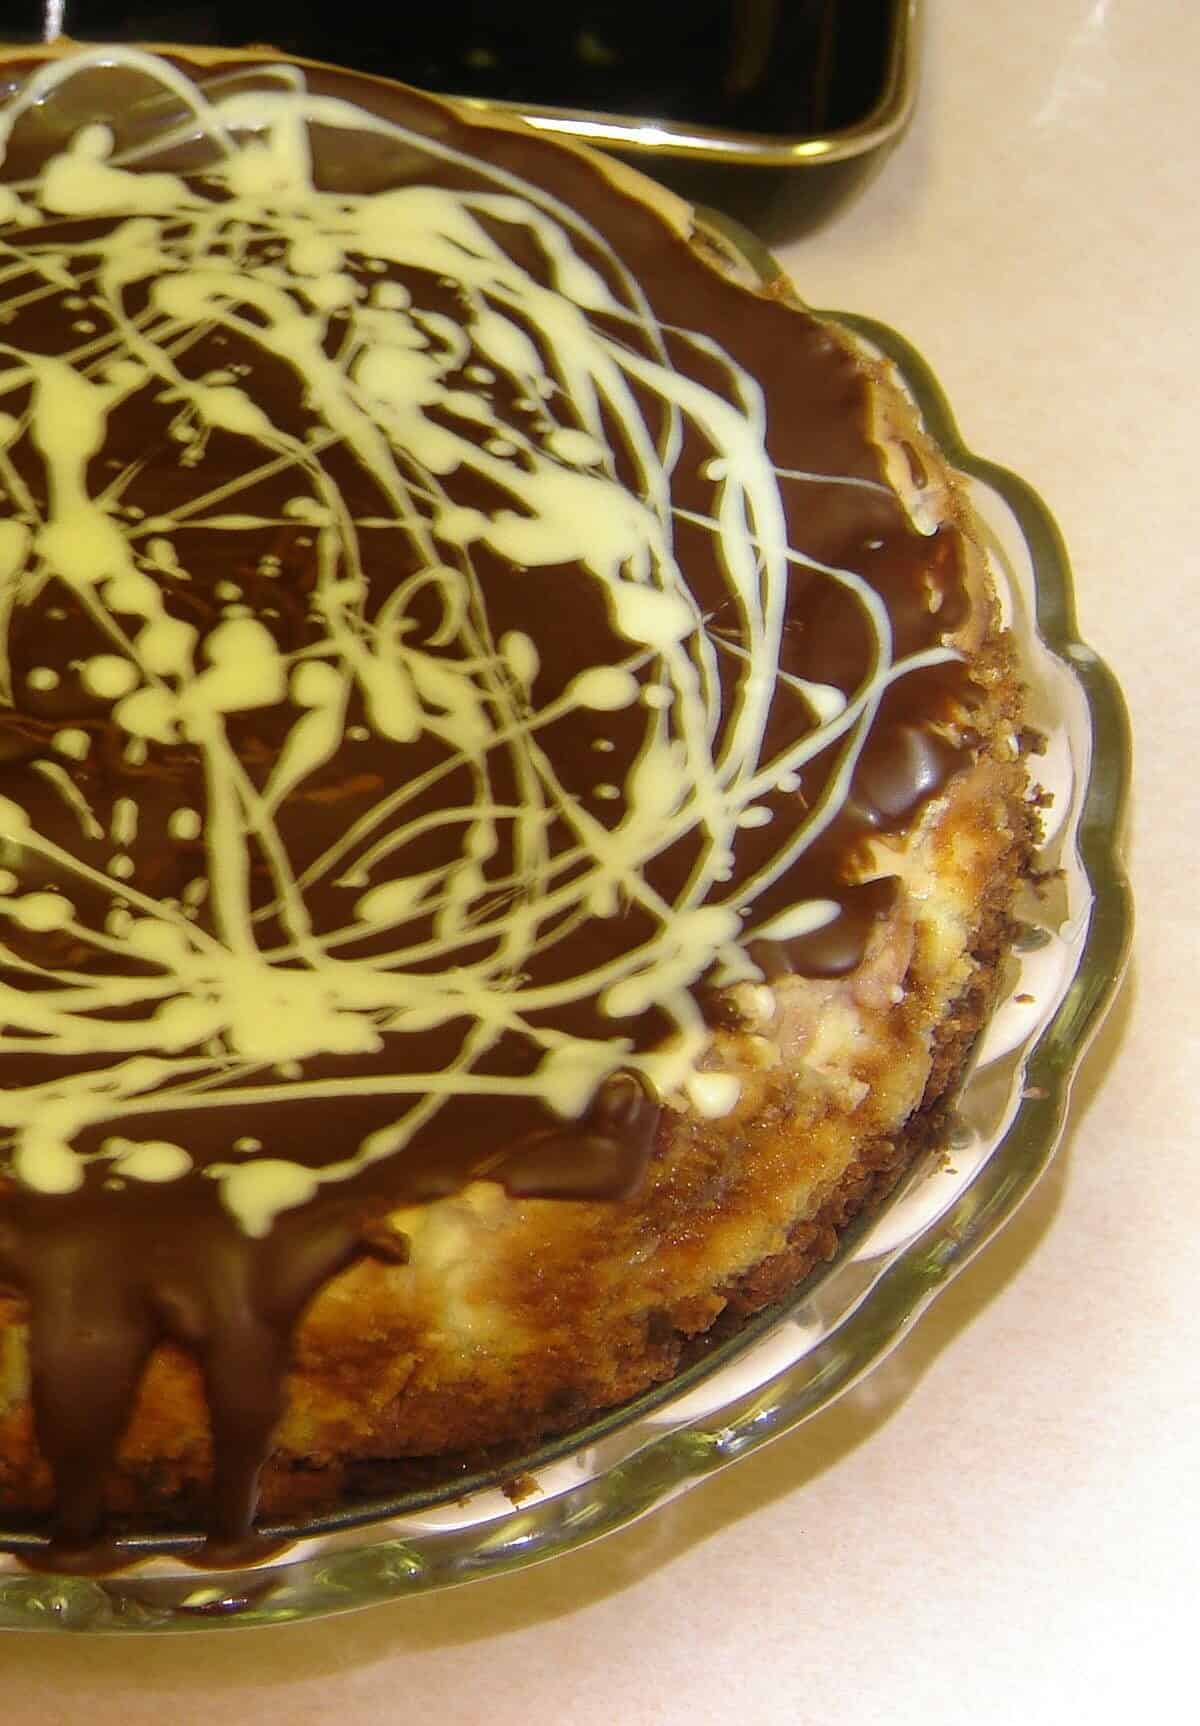  A slice of heaven: the ultimate Neapolitan Cheesecake.